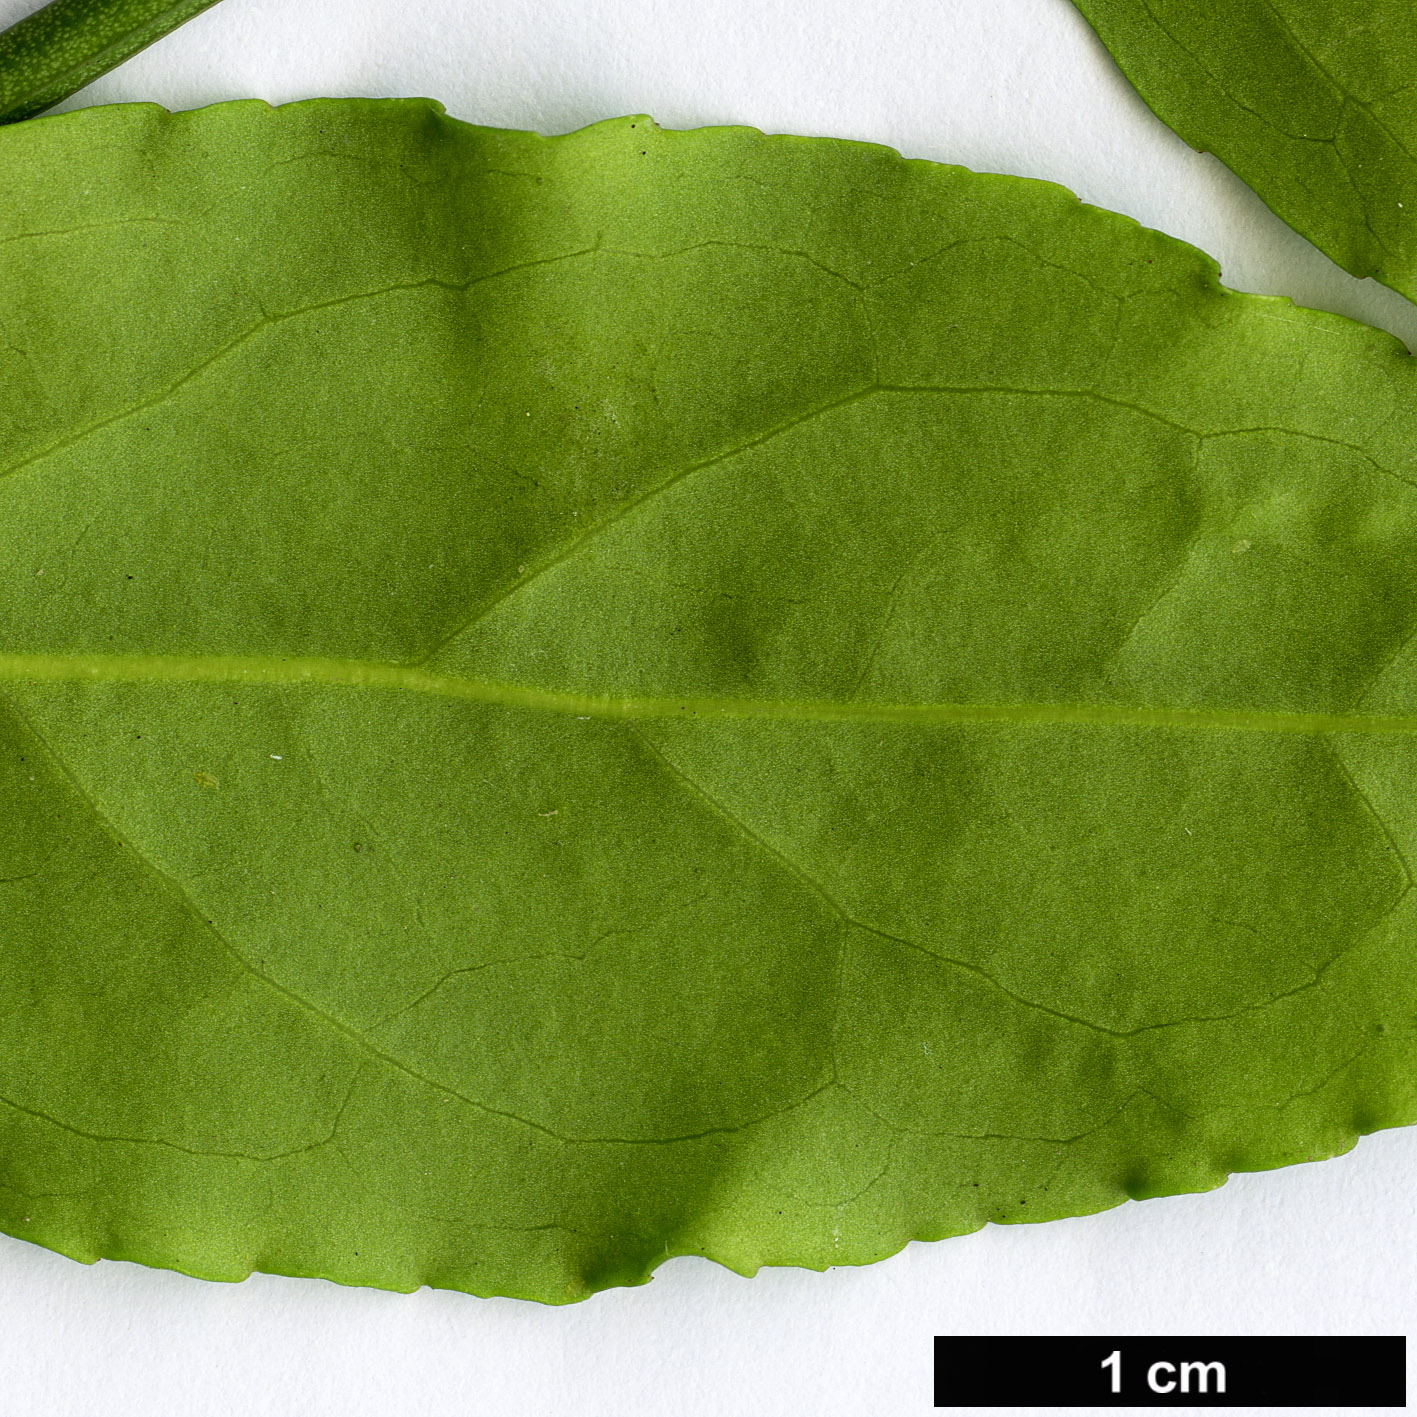 High resolution image: Family: Celastraceae - Genus: Euonymus - Taxon: americanus